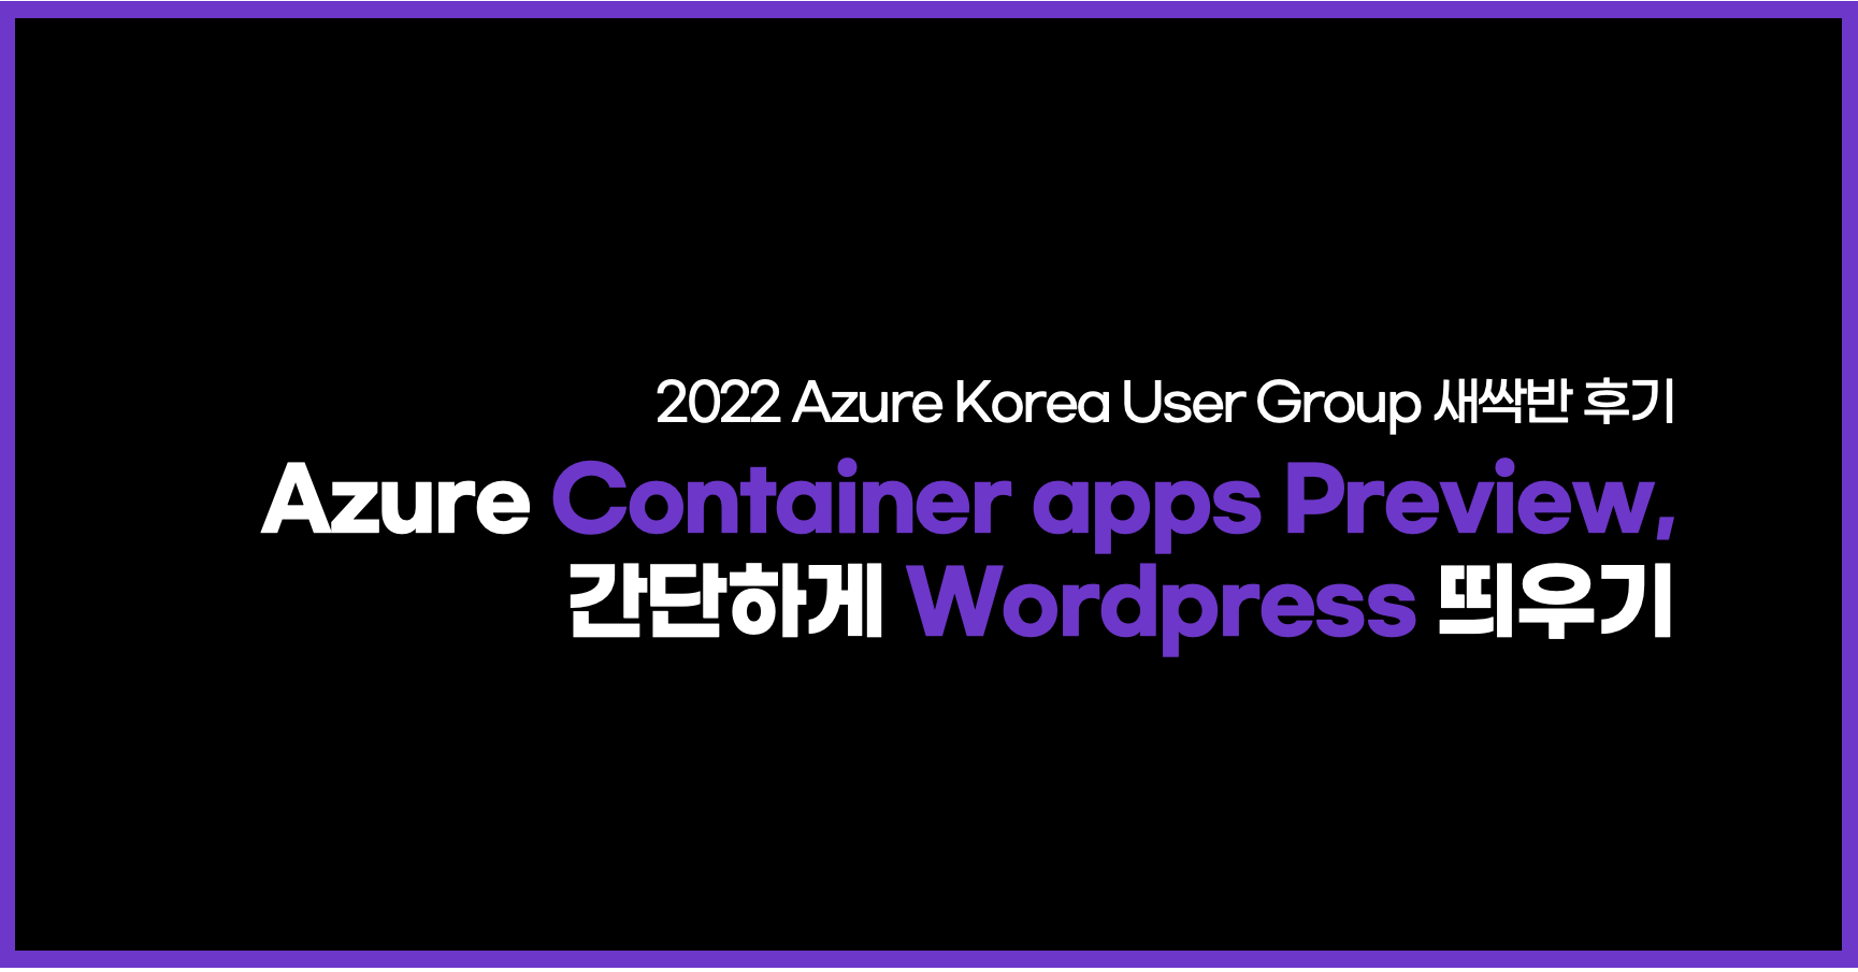 2022 Azure Korea User Group 새싹반 후기_Azure Container apps Preview, 간단하게 Wordpress 띄우기